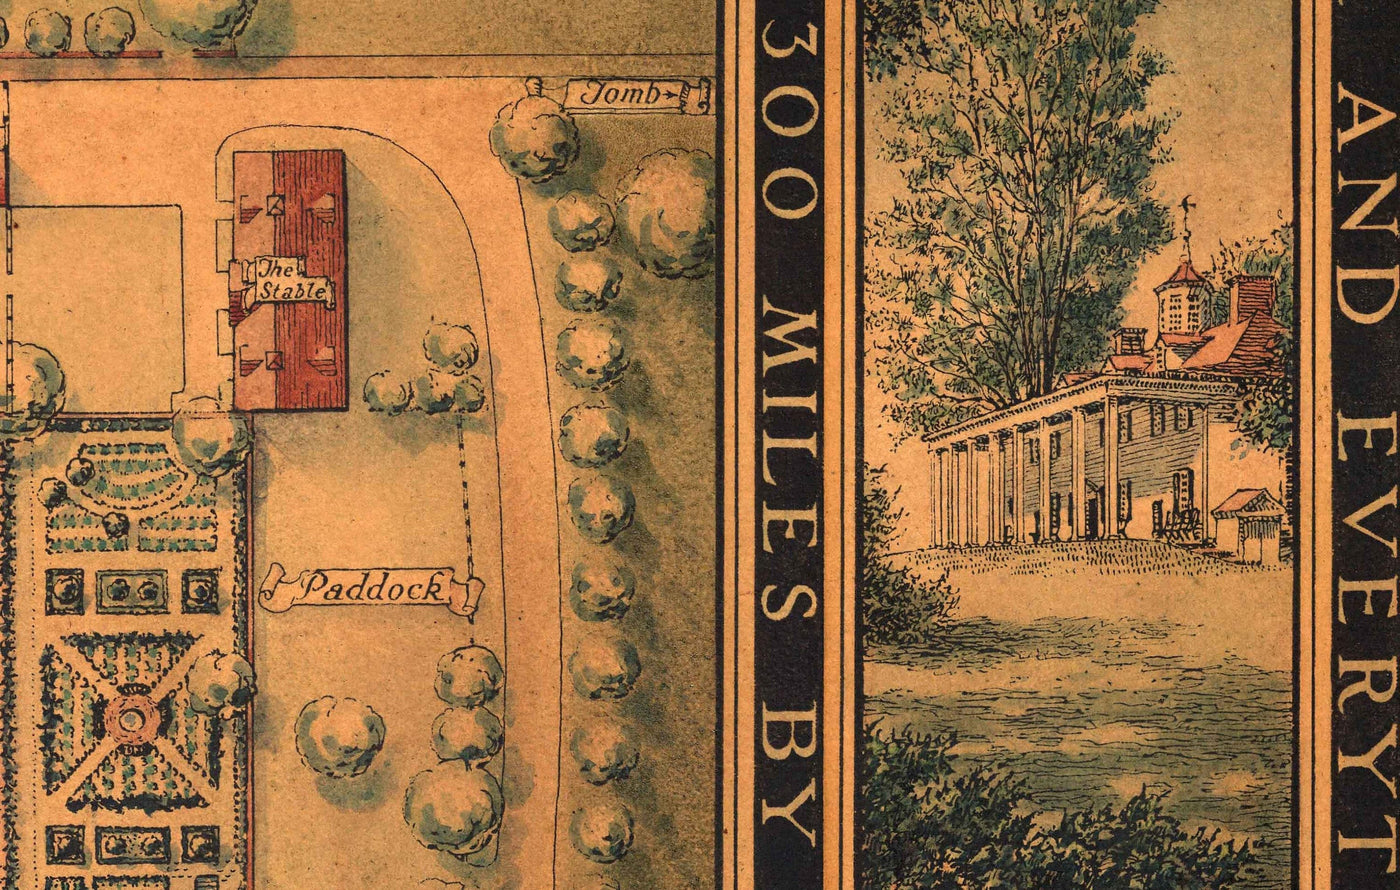 Old Plan of Mount Vernon, George Washington's Home, 1932, par B. Ashburton Tripp - Garden paysagiste, maison, succession